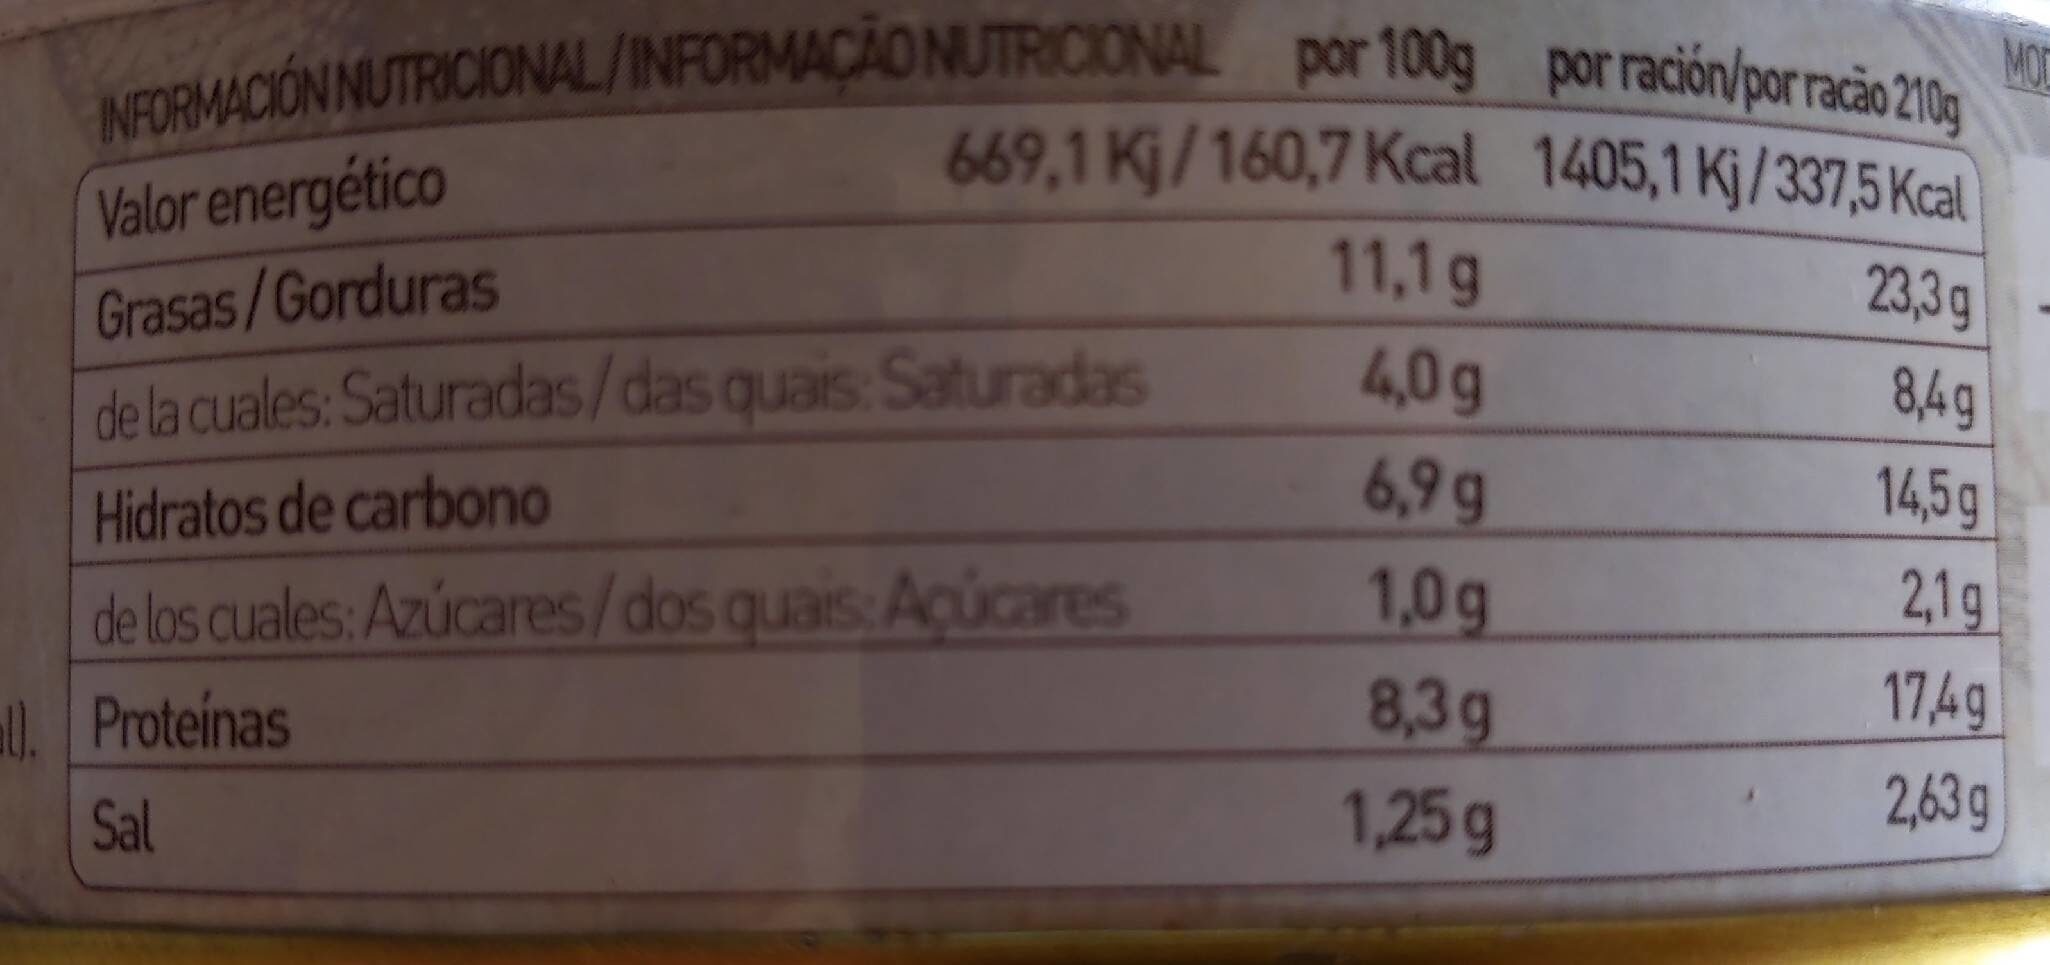 Albondigas & sabor - Nutrition facts - fr